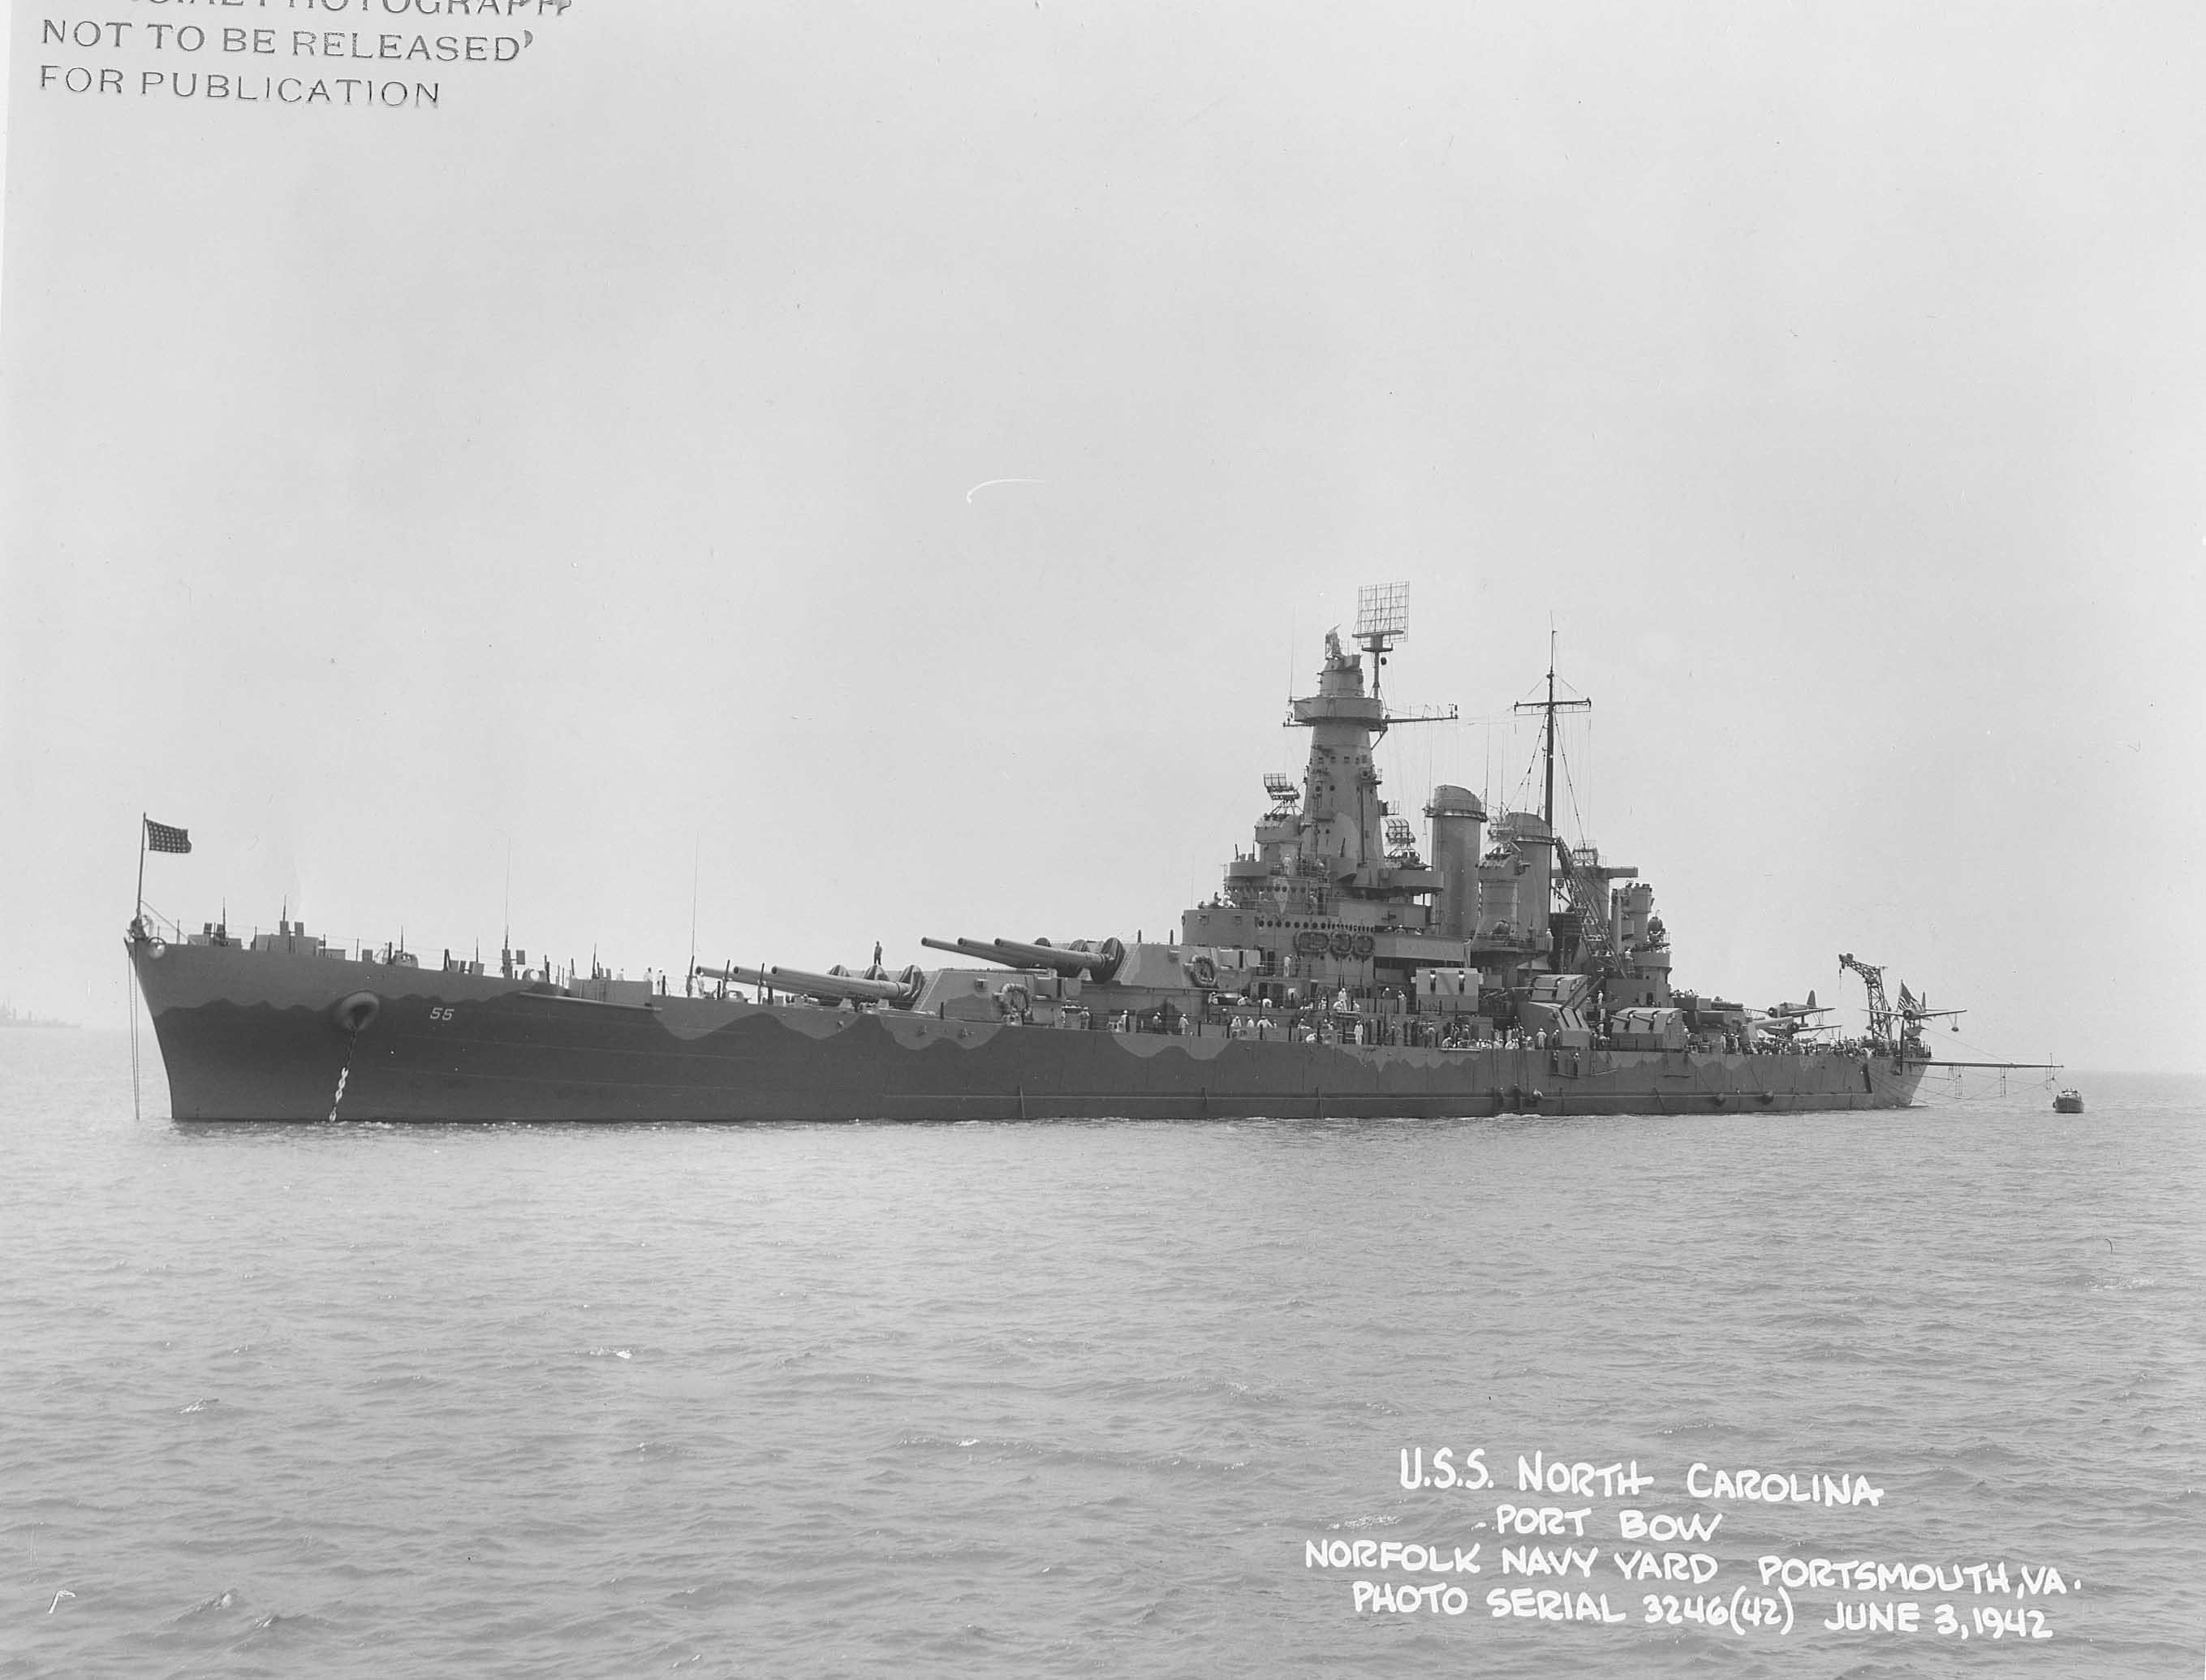 USS North Carolina off Norfolk Navy Yard, Portsmouth, Virginia, United States, 3 Jun 1942, photo 1 of 2